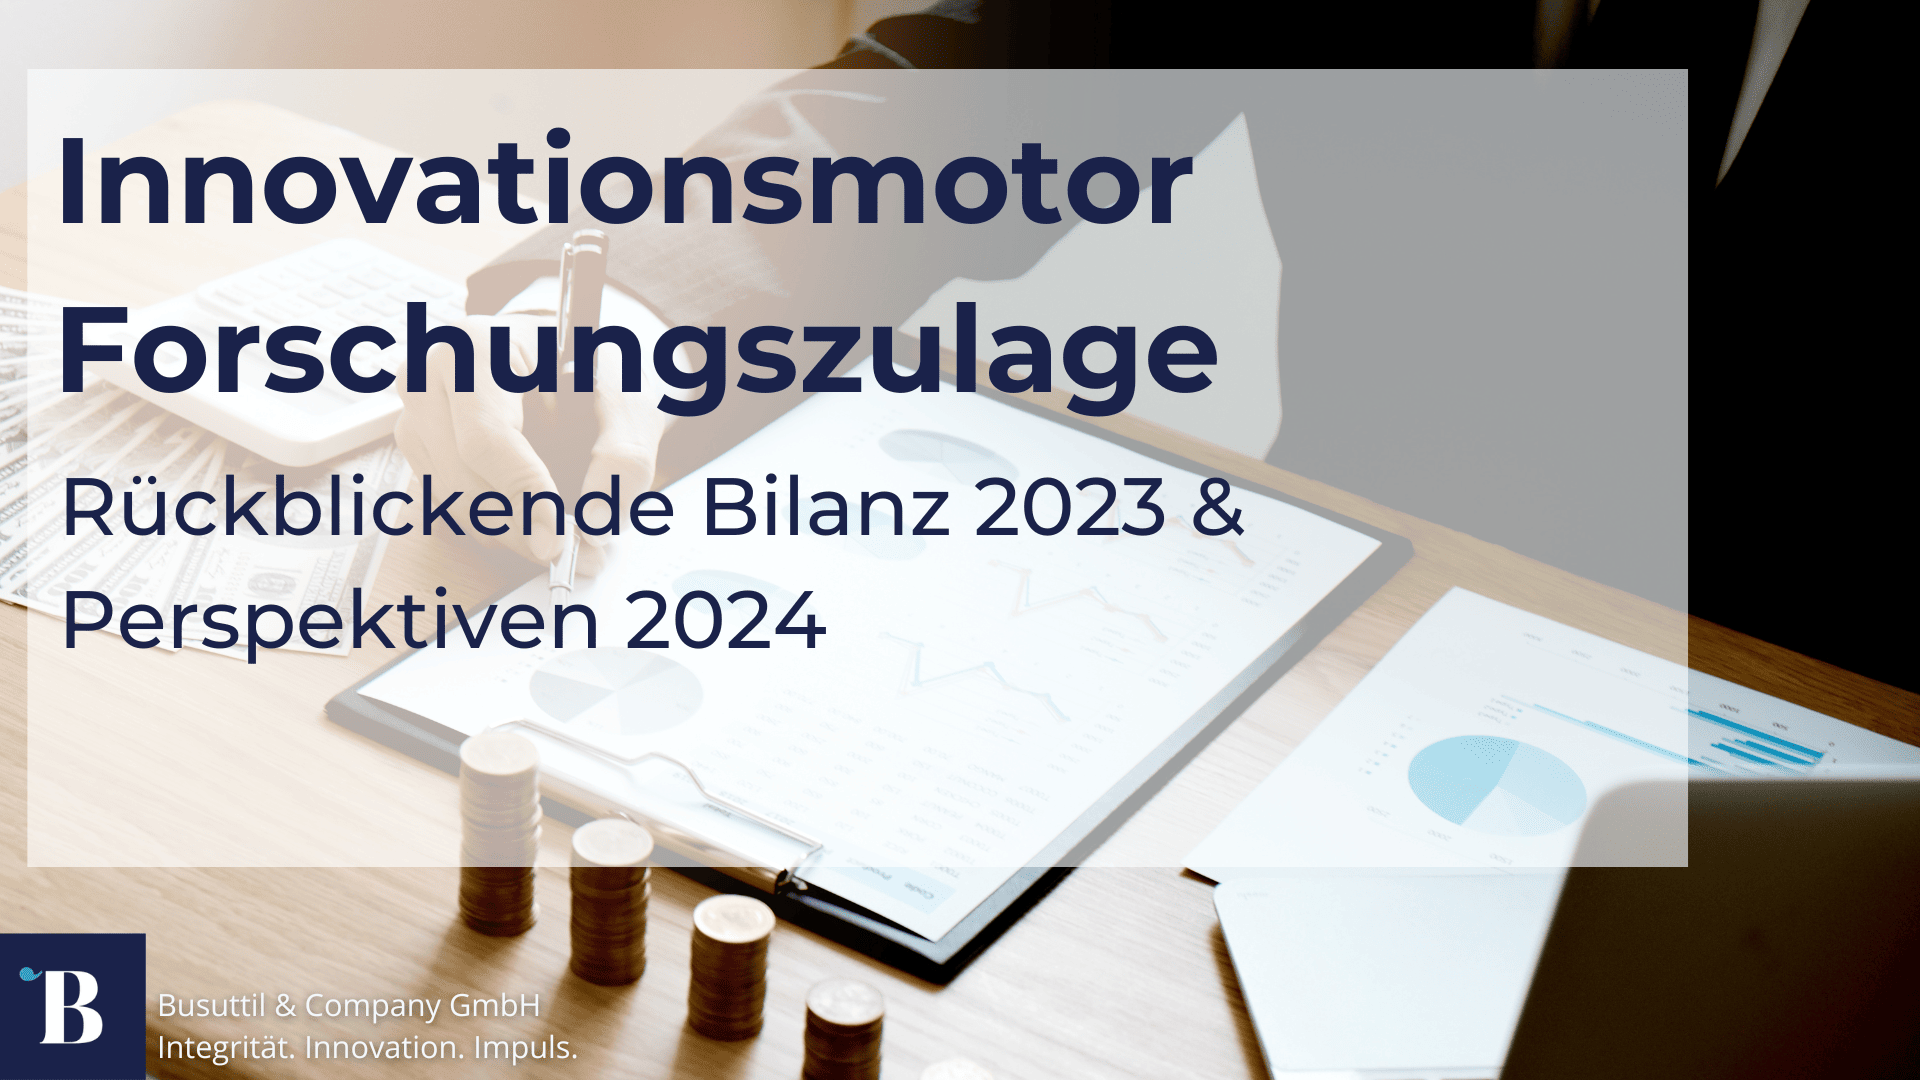 Innovationsmotor Forschungszulage: Rückblickende Bilanz 2023 & Perspektiven 2024